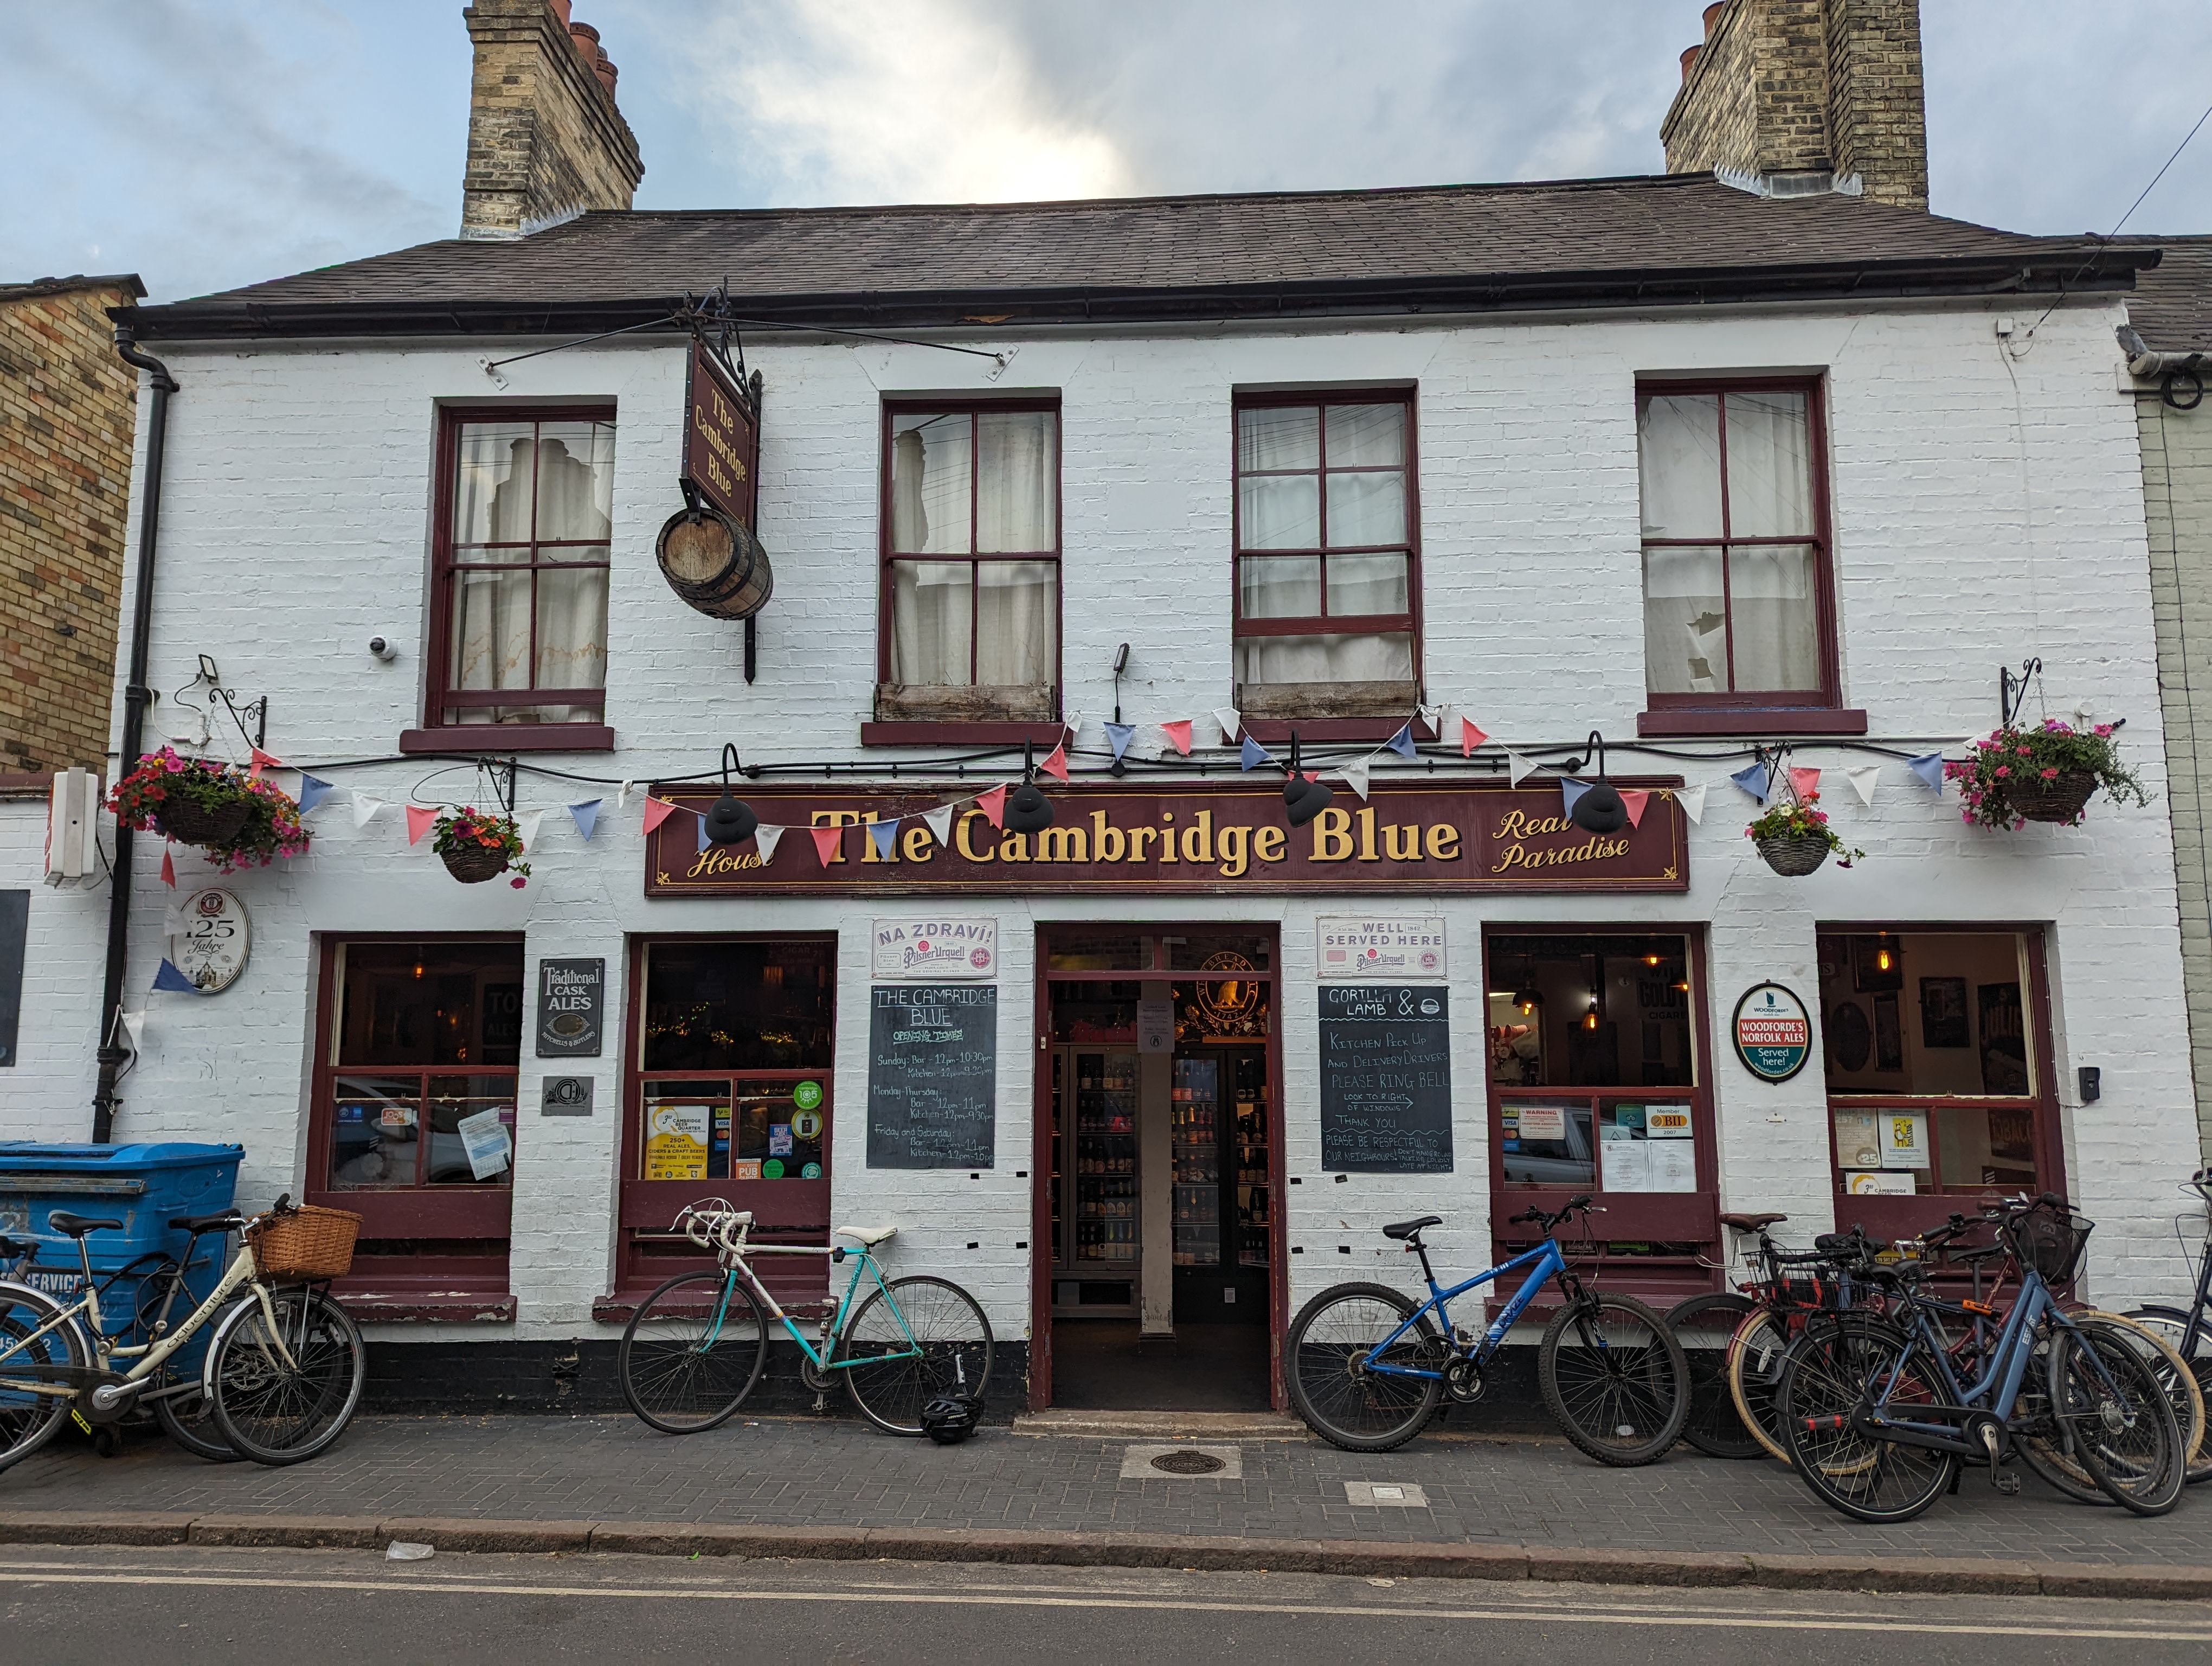 Gorilla + Lamb burgers @ The Cambridge Blue